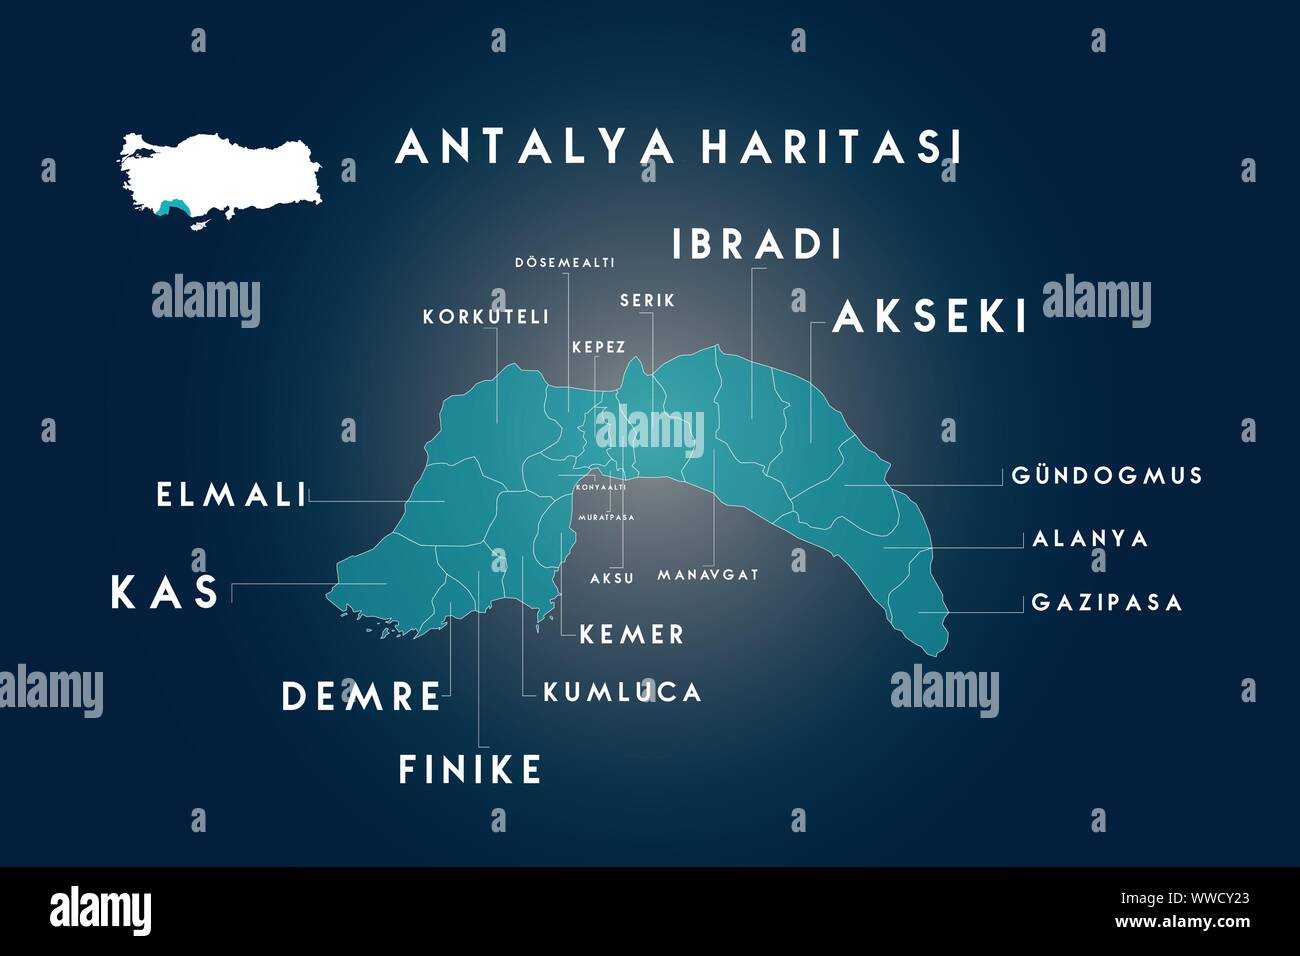 Antalya districts Dosemealti, Korkuteli, Kepez, Serik, İbradi, Akseki, Gundogmus, Alanya, Gazipasa, Konyalalti, Muratpasa, Aksu, Manavgat, Kemer, Kuml Stock Vector